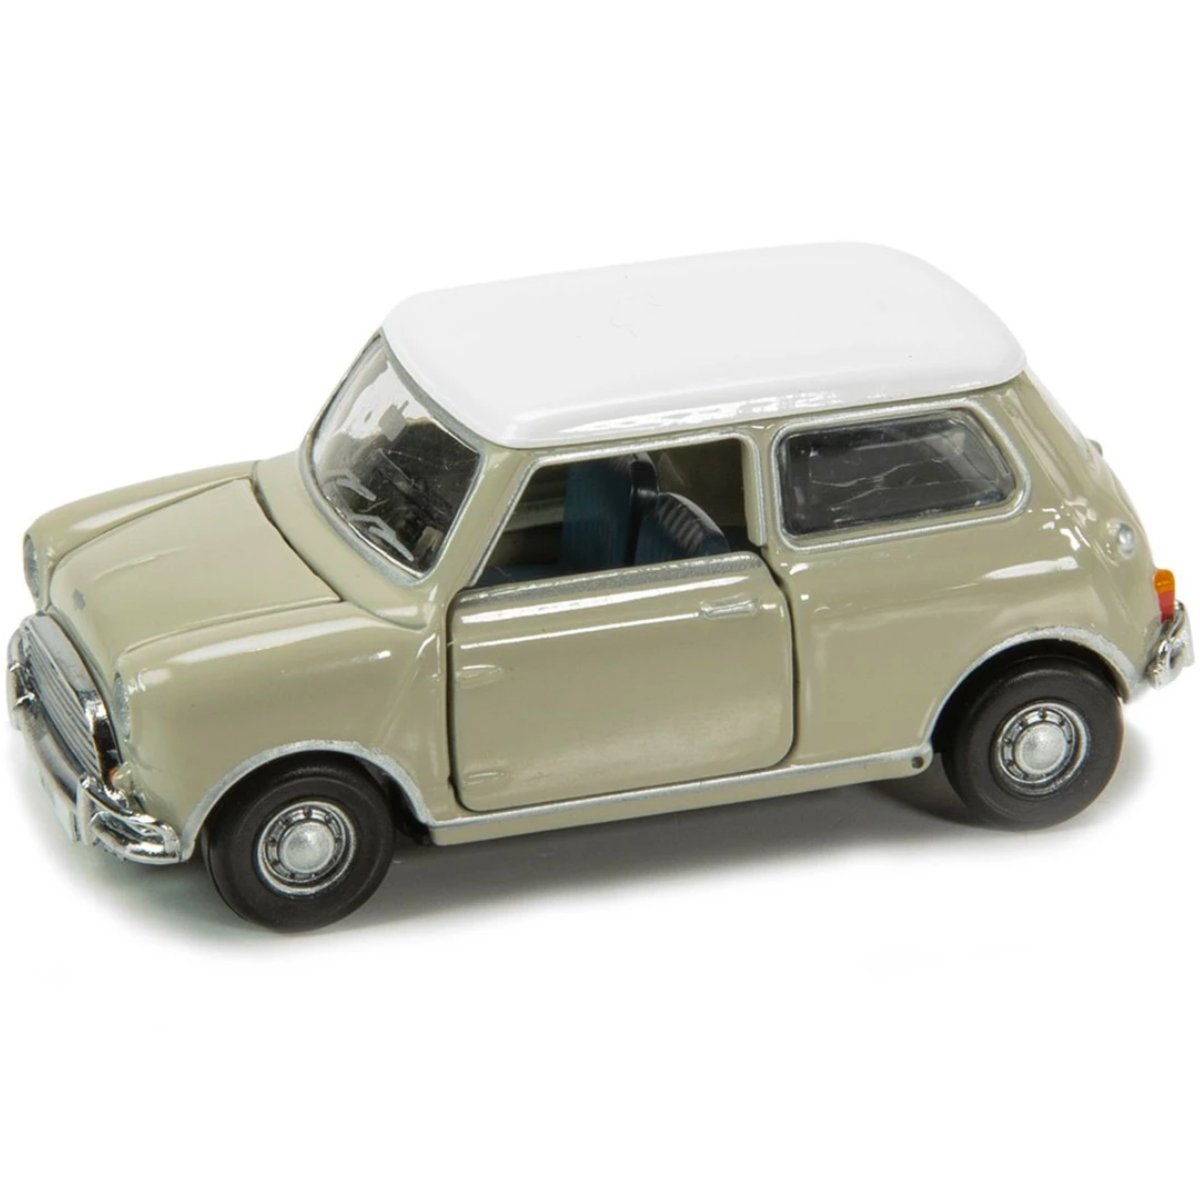 Tiny Models Mini Cooper MK1 402C (1:50 Scale) - Phillips Hobbies